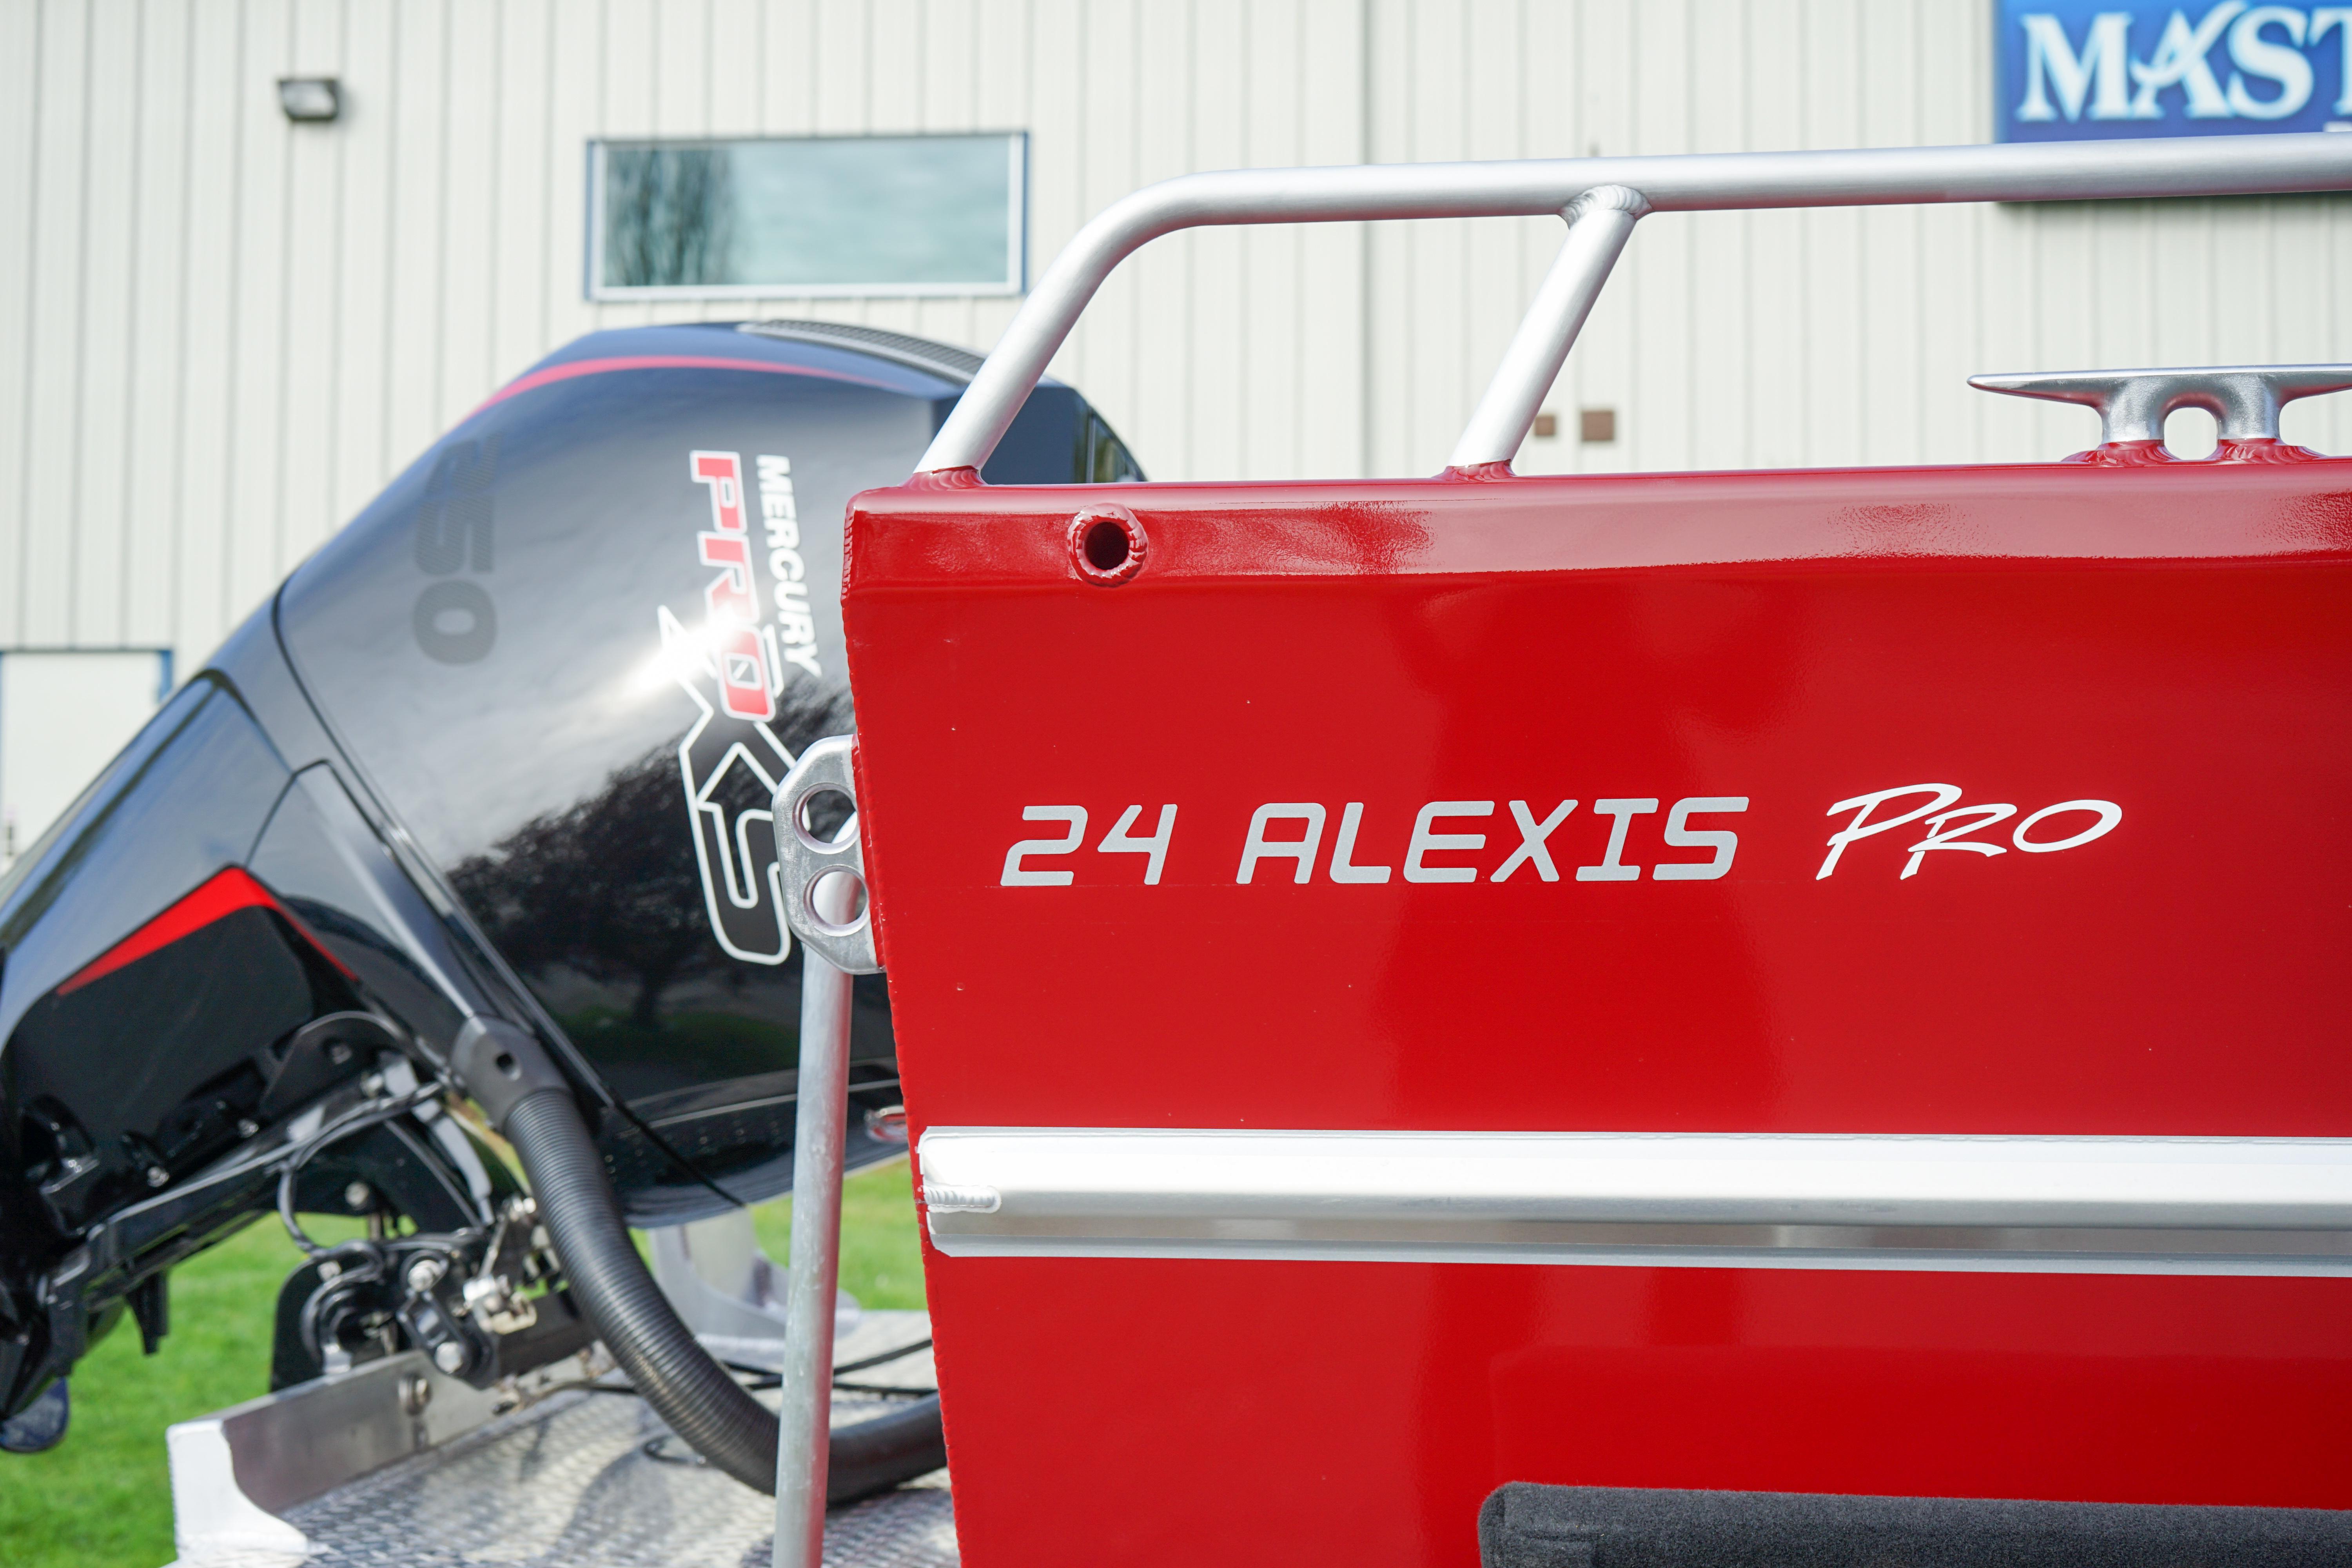 2024 Thunder Jet 24 Alexis Pro